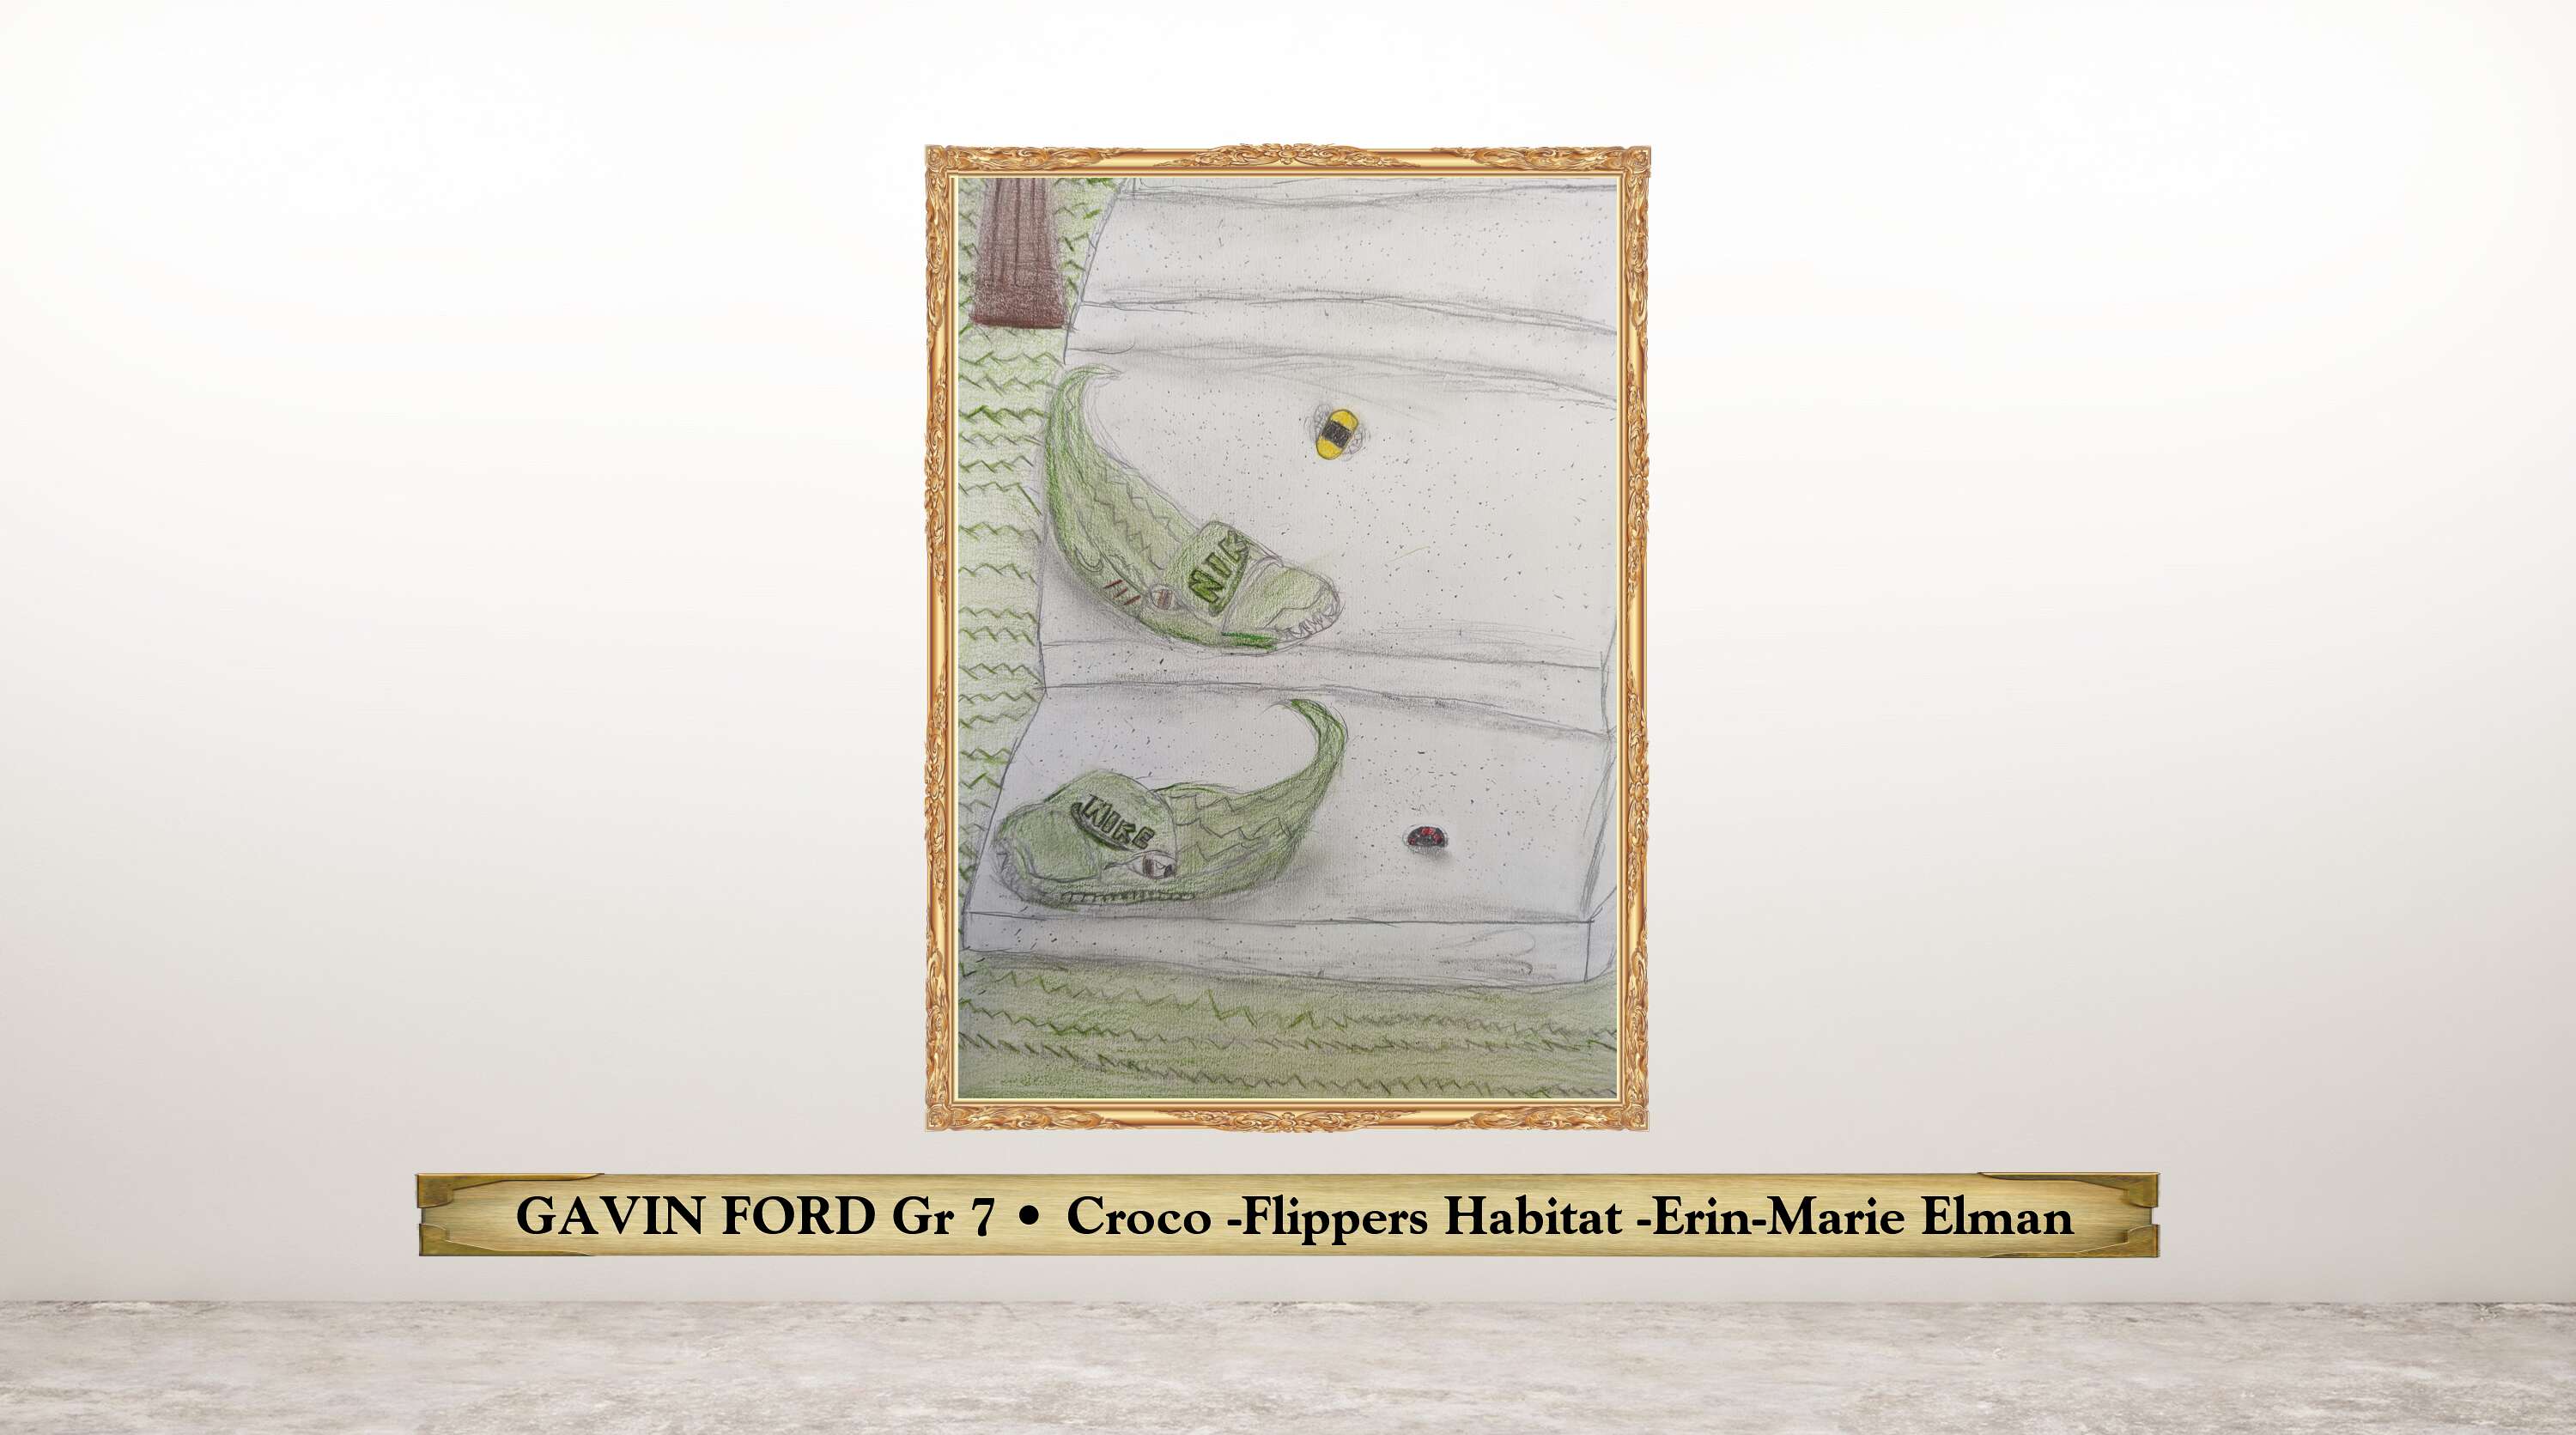  GAVIN FORD Gr 7 • Croco -Flippers Habitat -Erin-Marie Elman